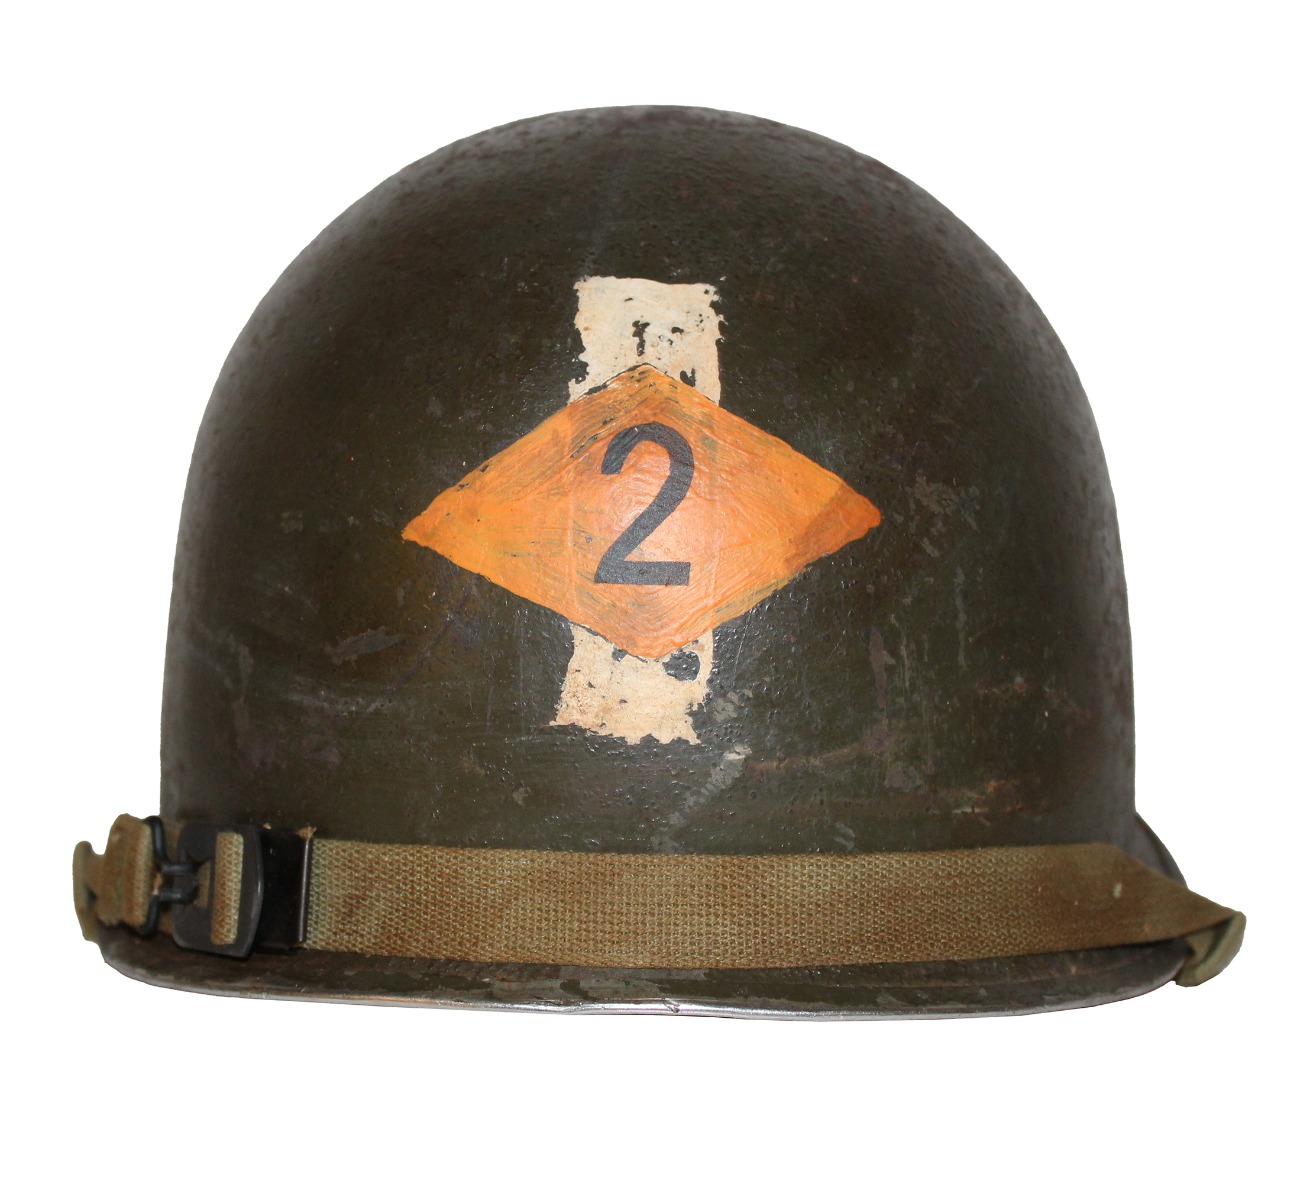 US WW2 2ND RANGERS ORIGINAL M1 HELMET SHELL REFURBISHED 